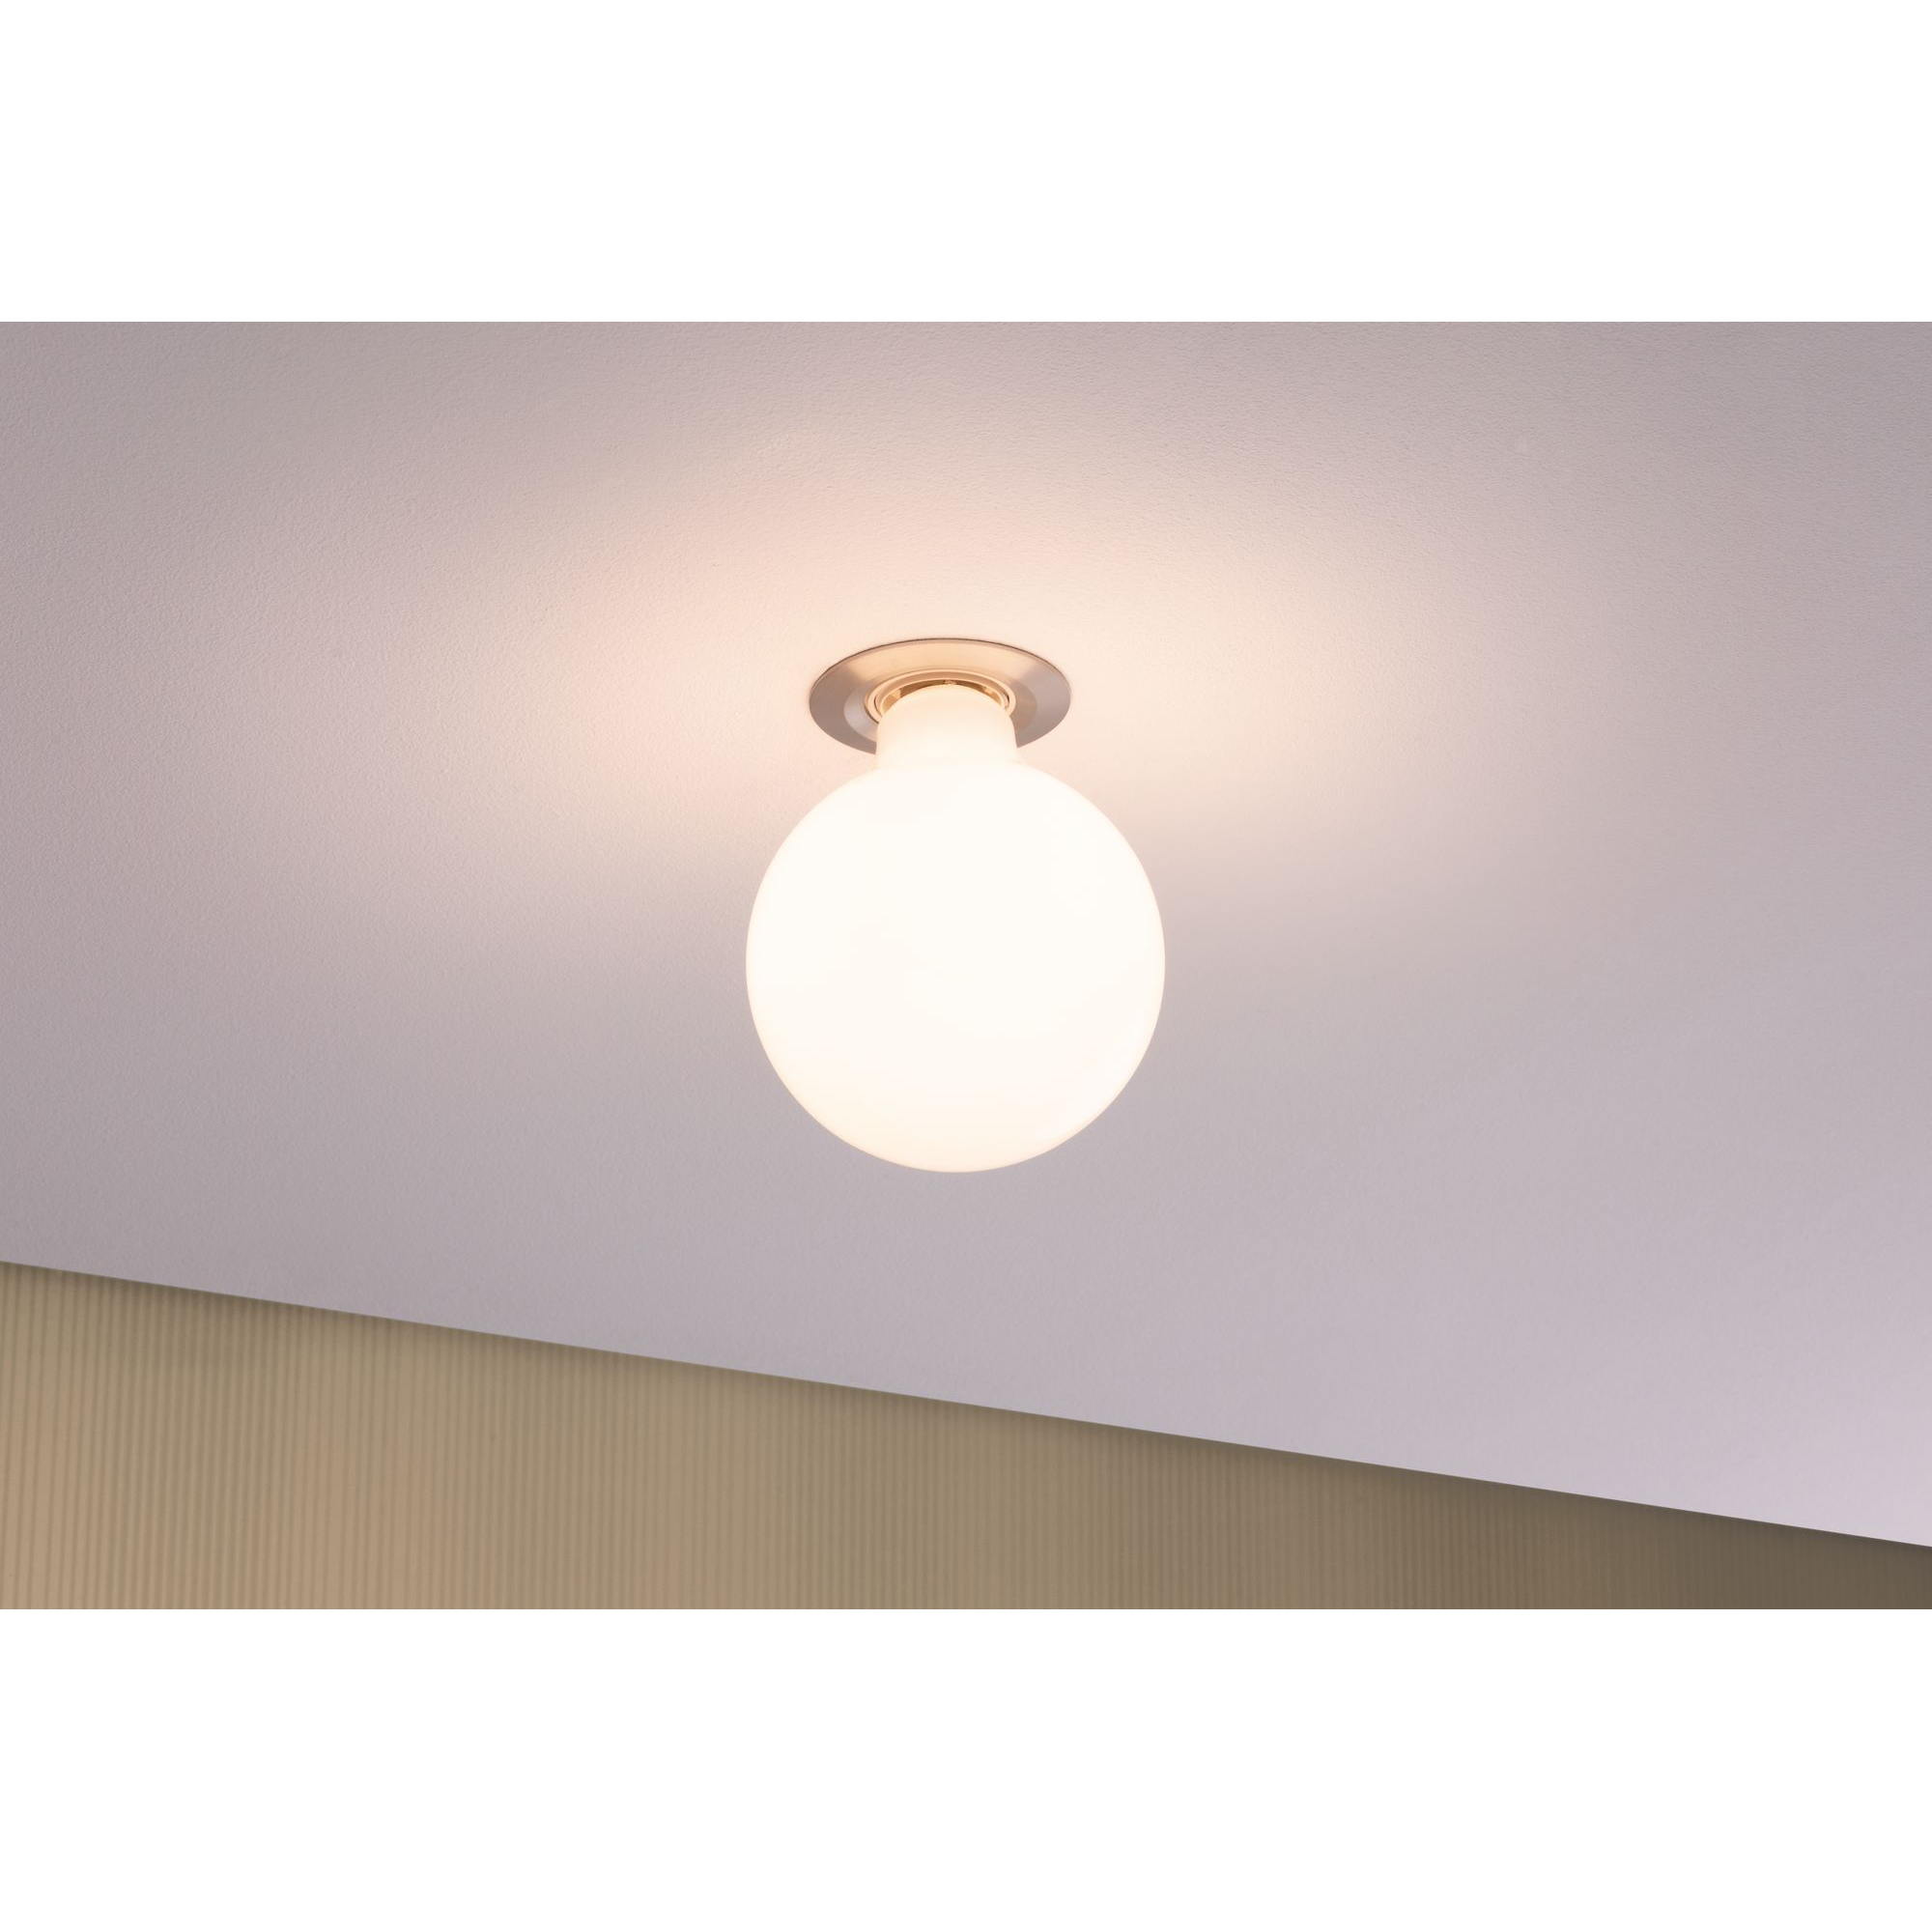 LED-Globelampe G125 E27 9W (75W) 1055 lm warmweiß + product picture